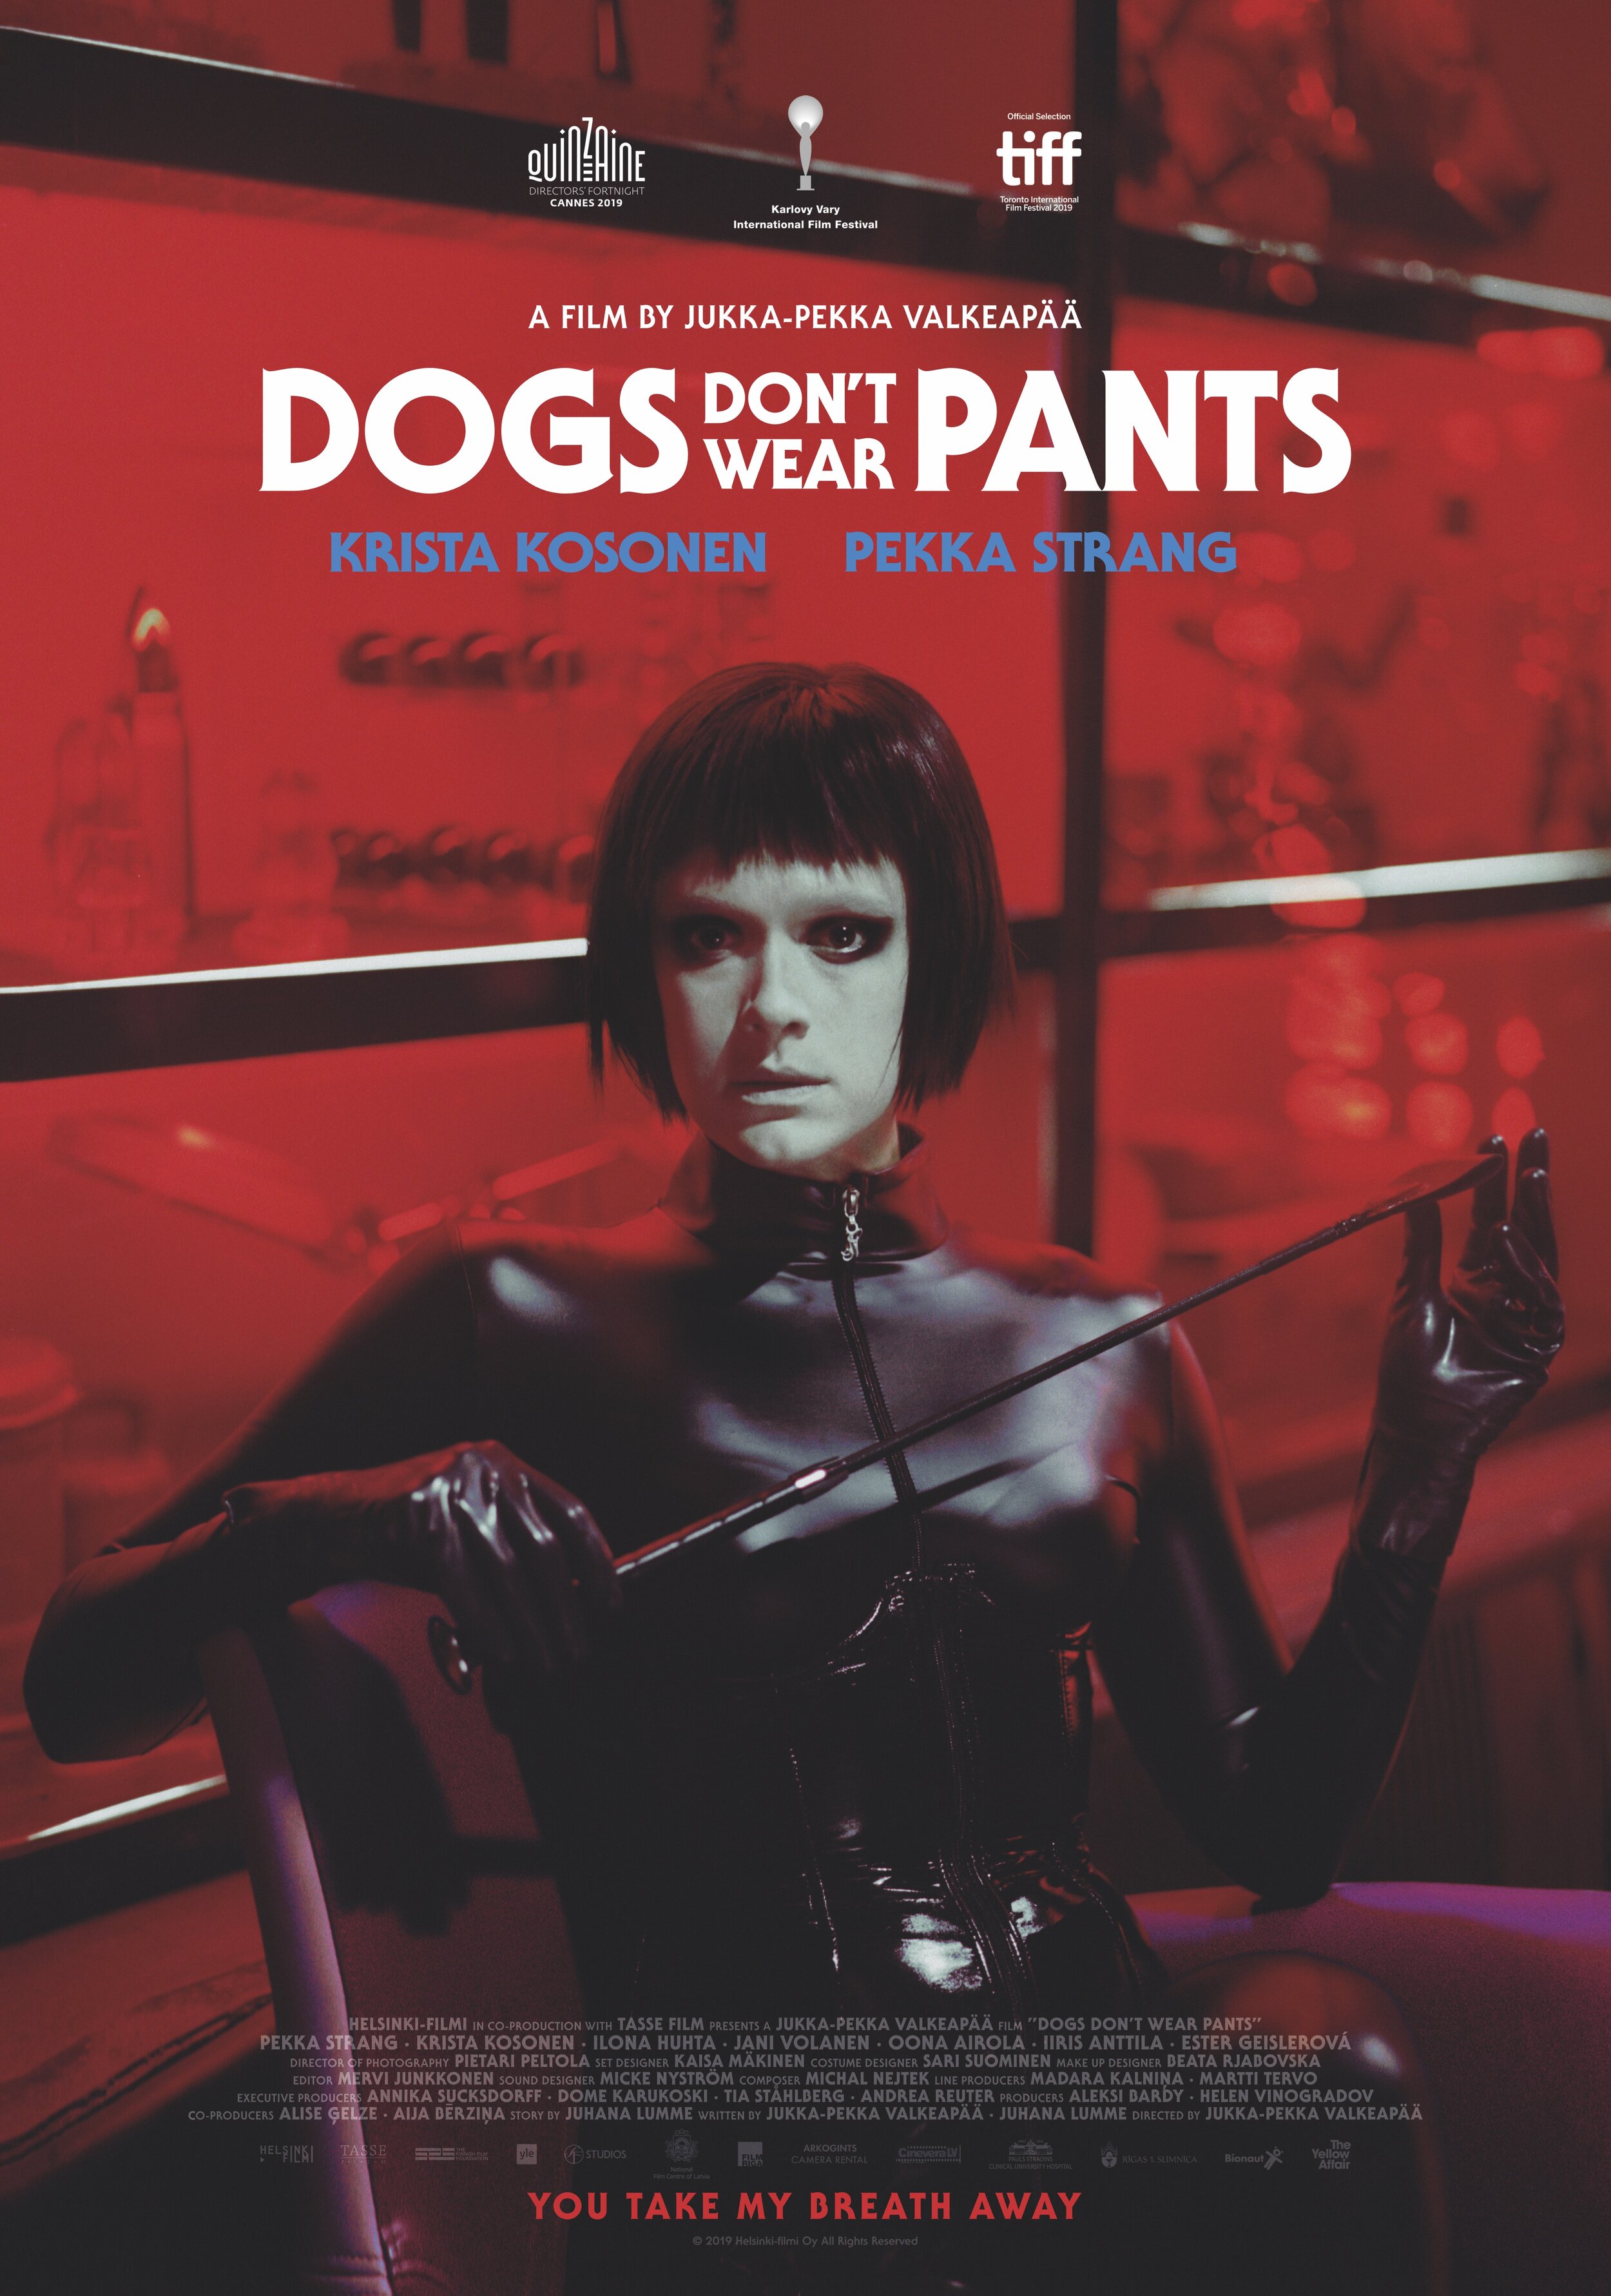 Dogs Poster - New.jpg